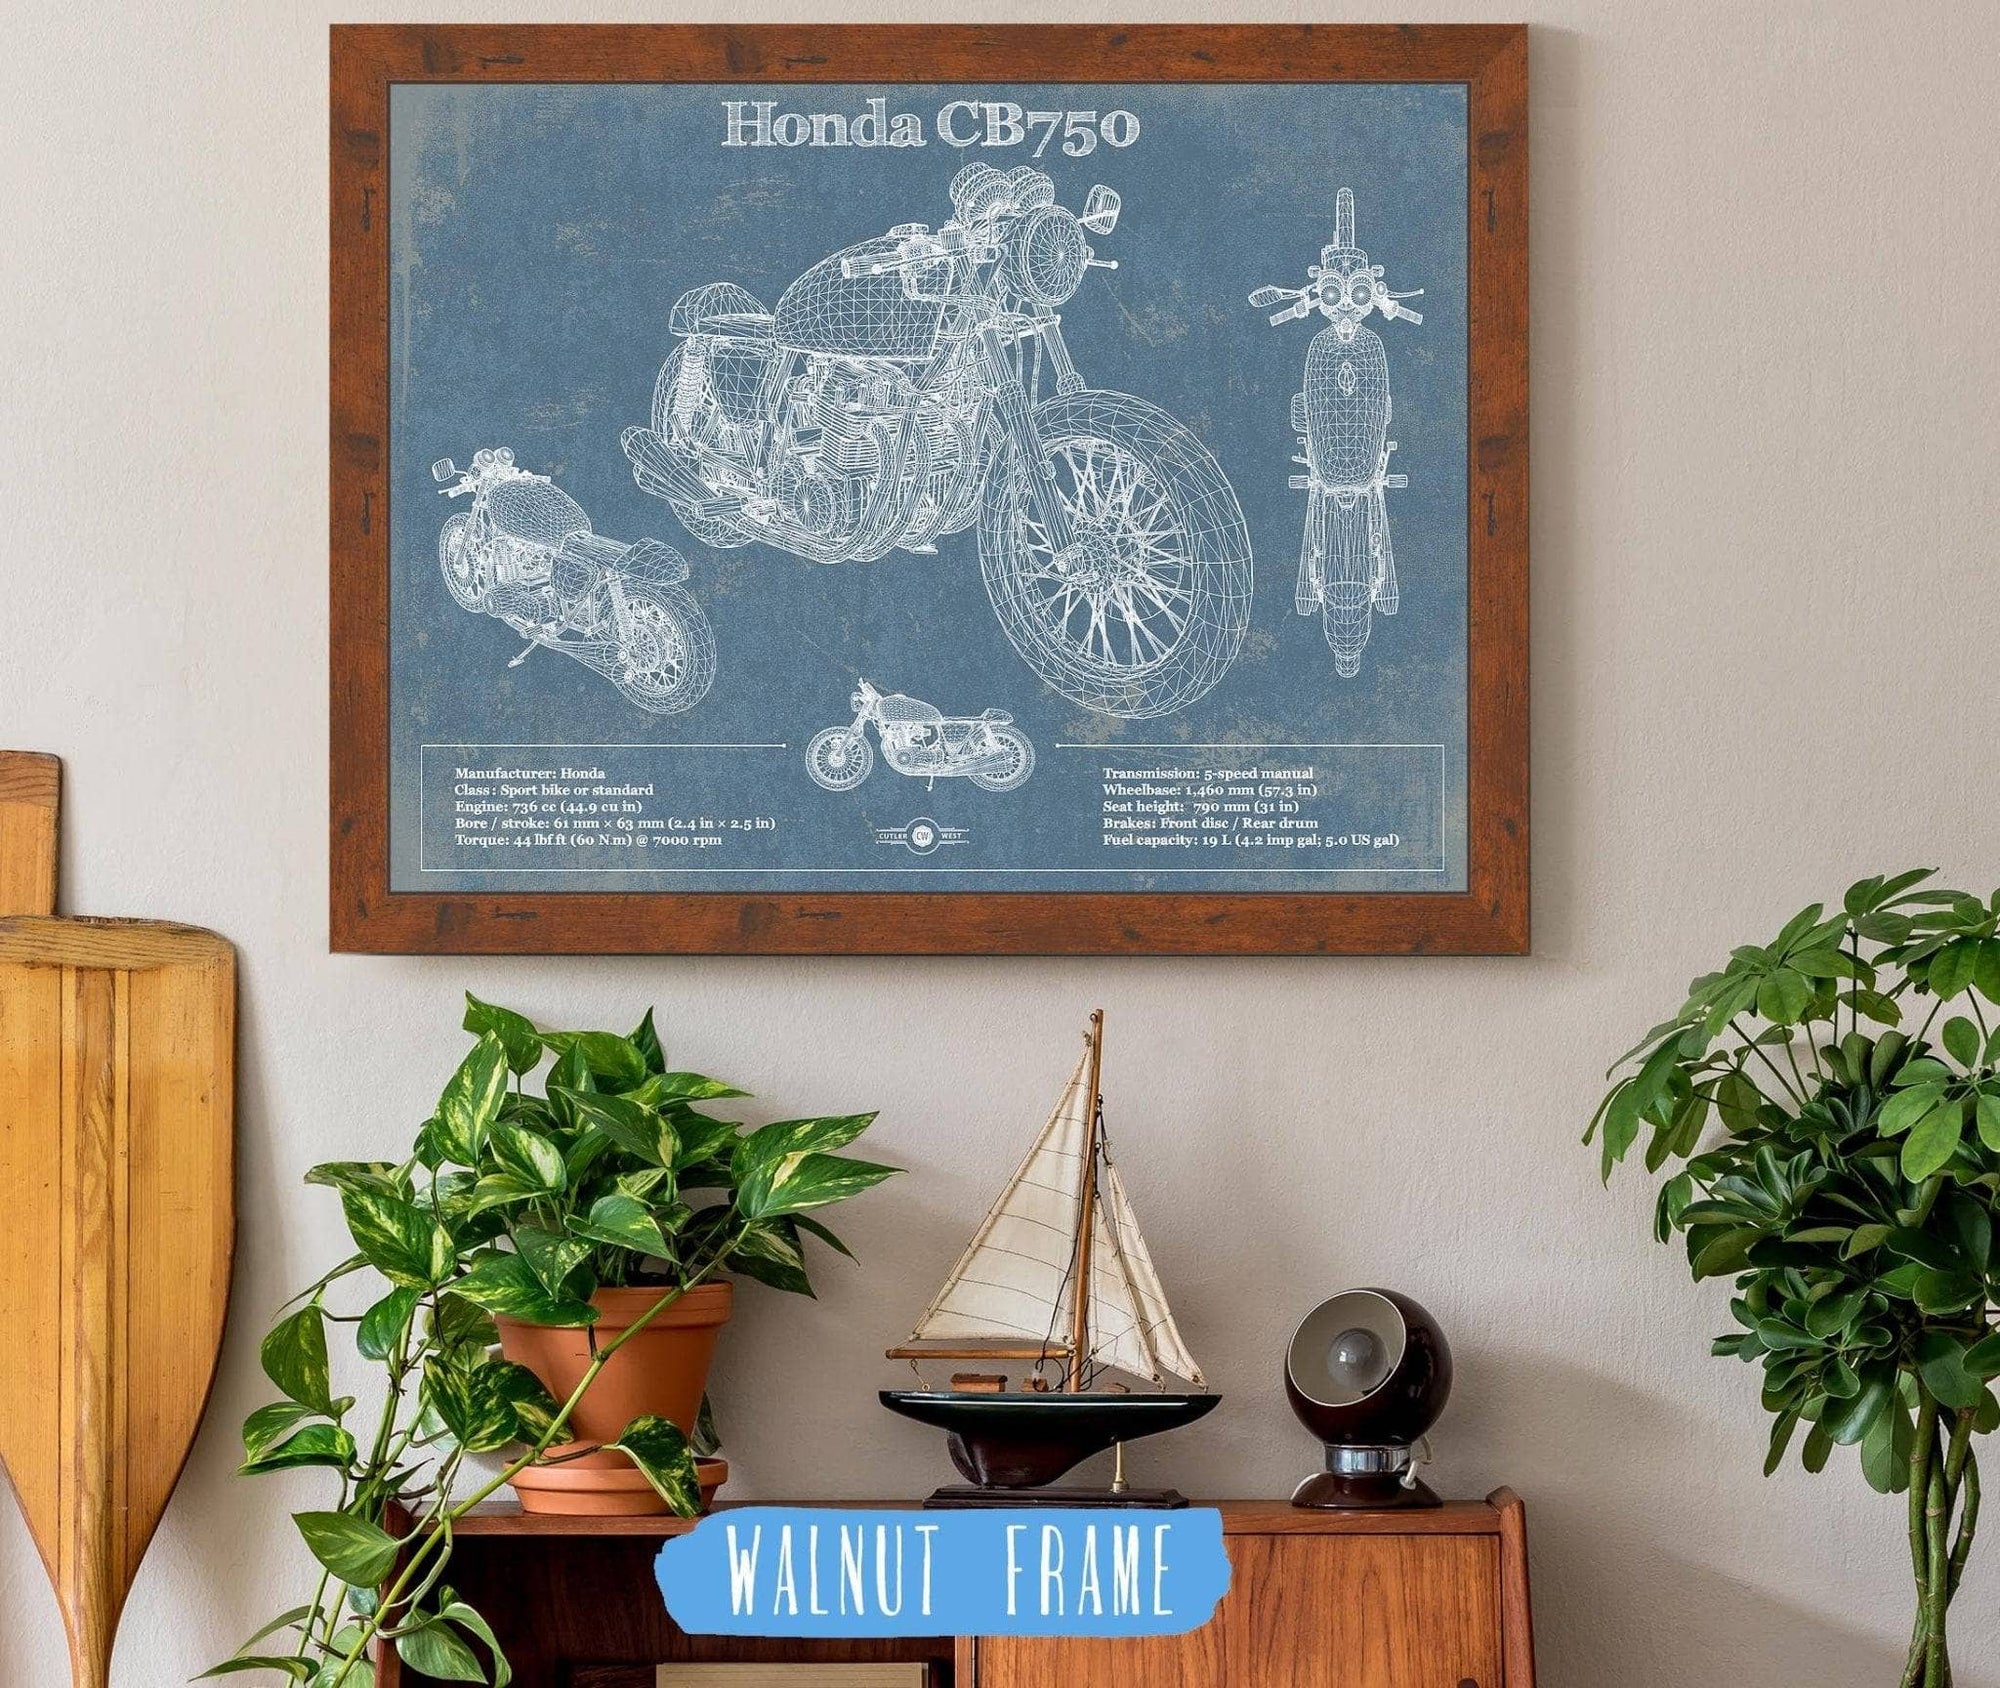 Cutler West 14" x 11" / Walnut Frame Honda CB750 Motorcycle Patent Print 833110082_21433